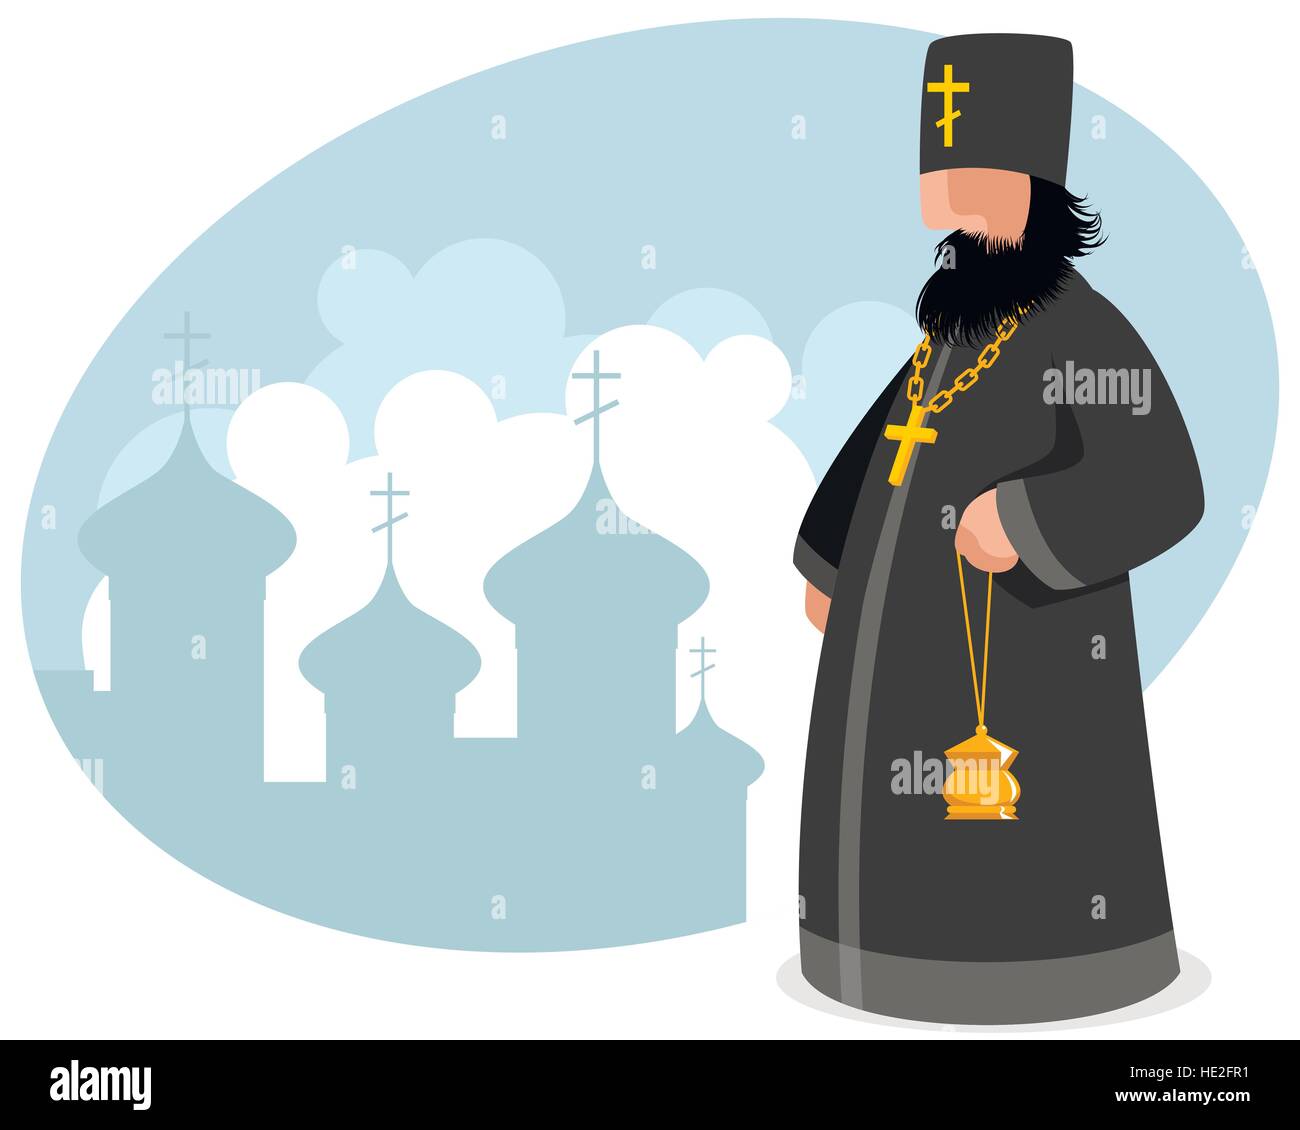 orthodox priest clipart